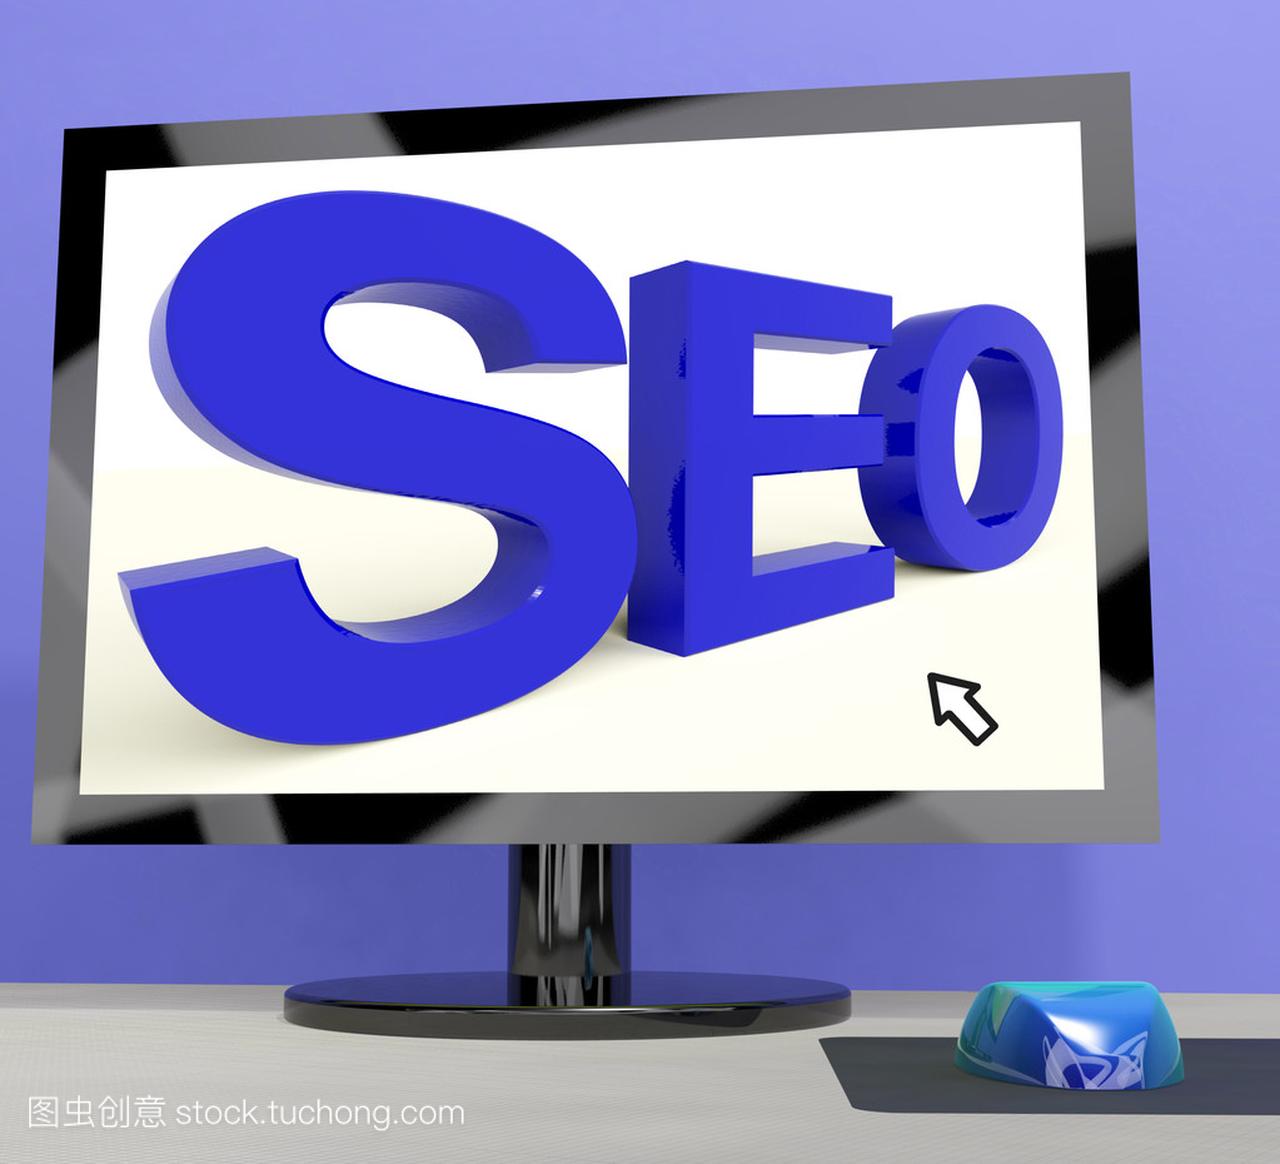 seo word 显示在线网站优化的计算机上